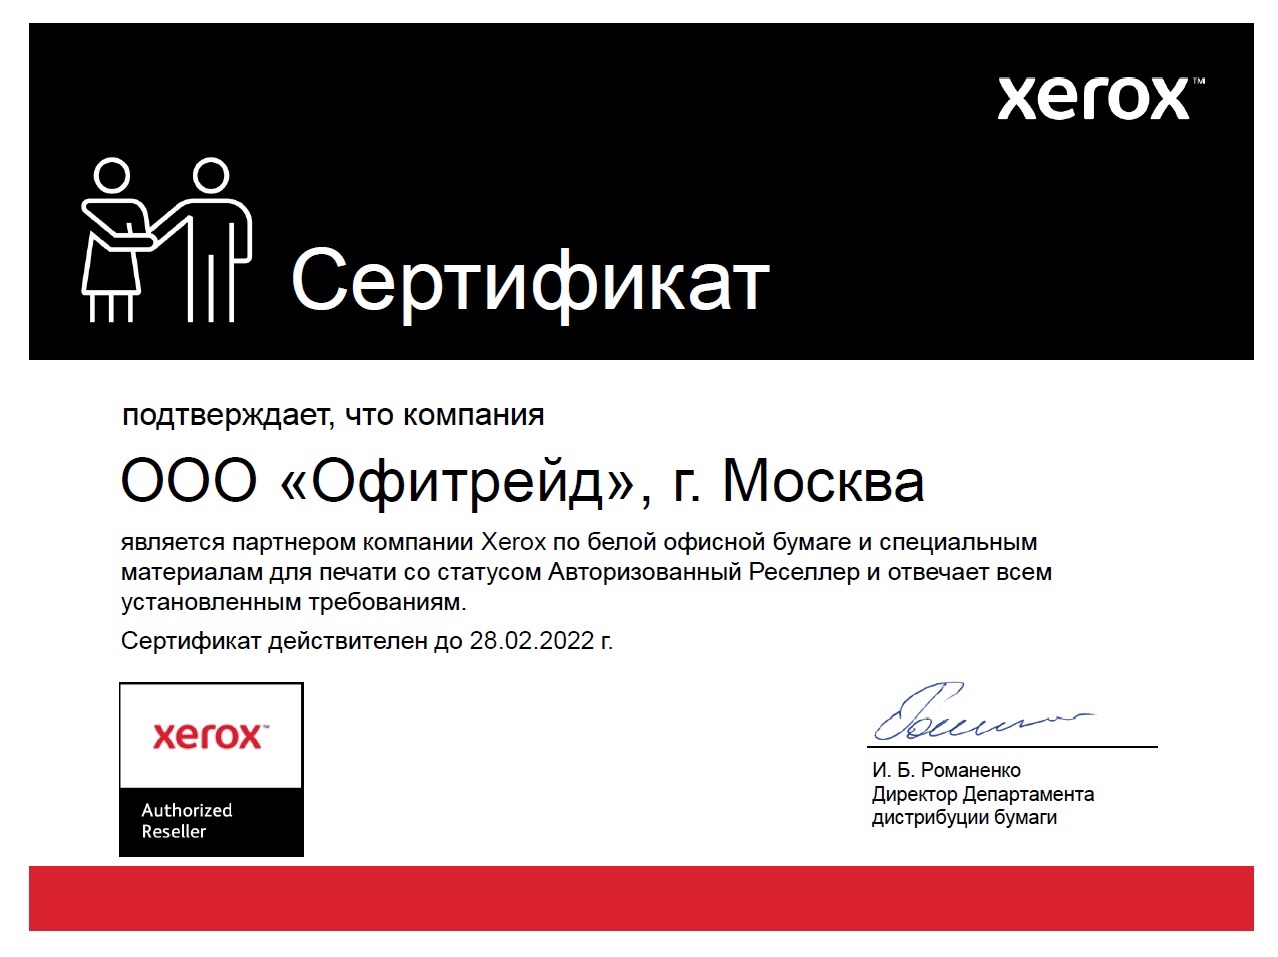 Сертификат партнера Xerox для Офитрейд